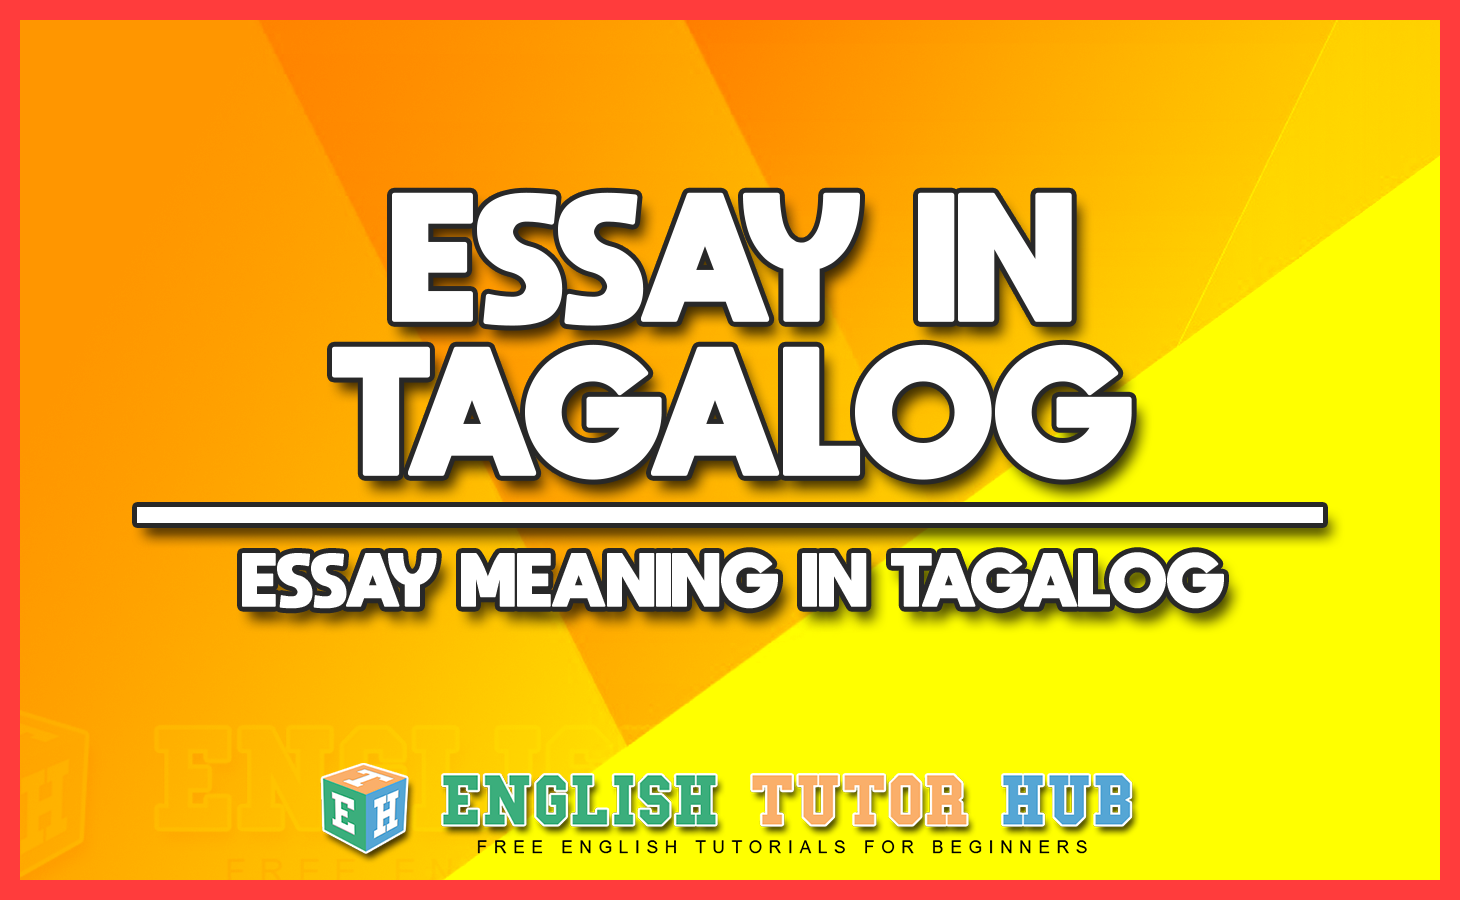 keynote speech meaning in tagalog